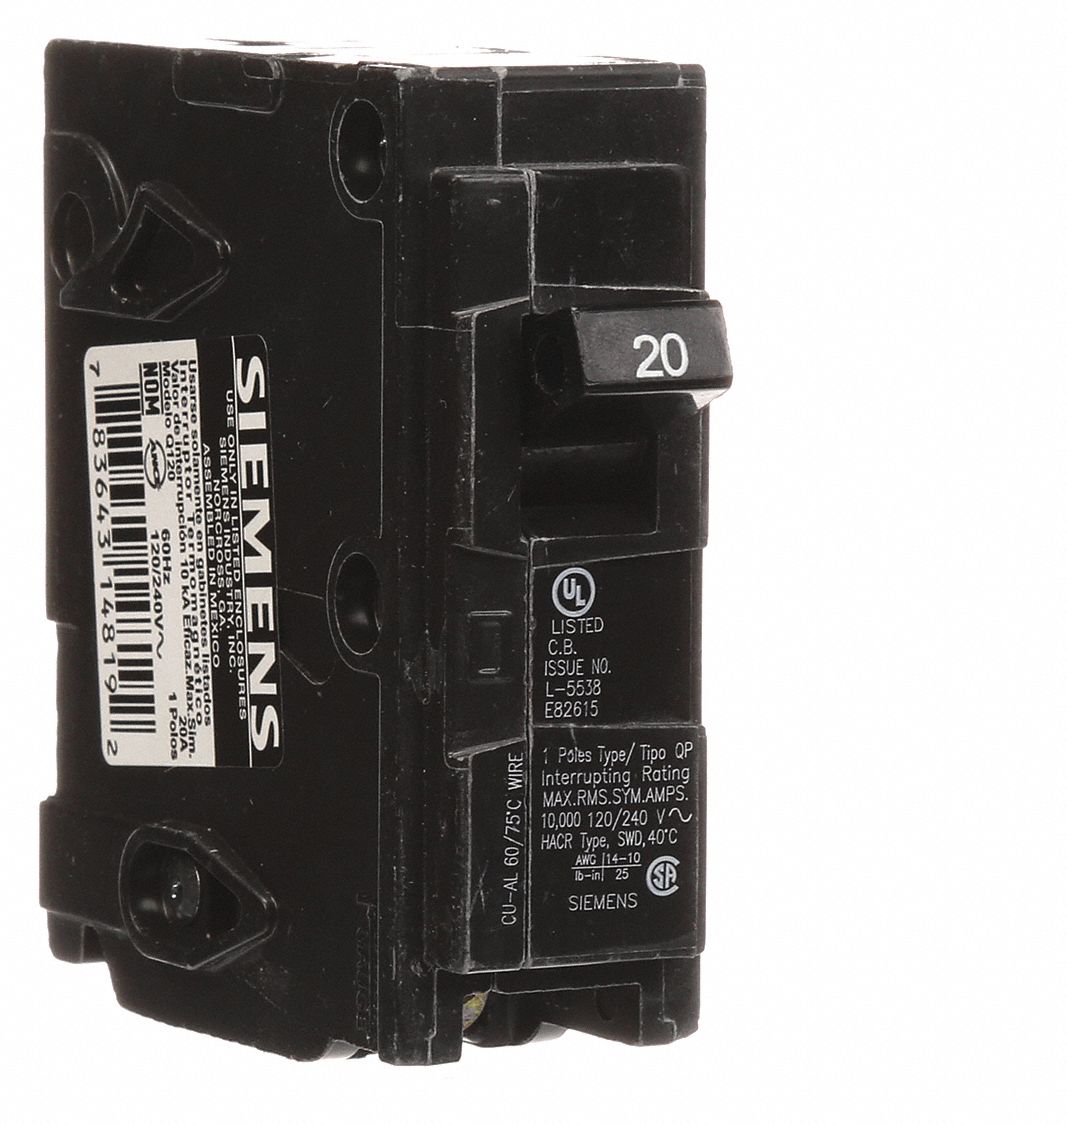 Siemens ITE Q120 20 Amp 1 Pole 120v Circuit Breaker for sale online